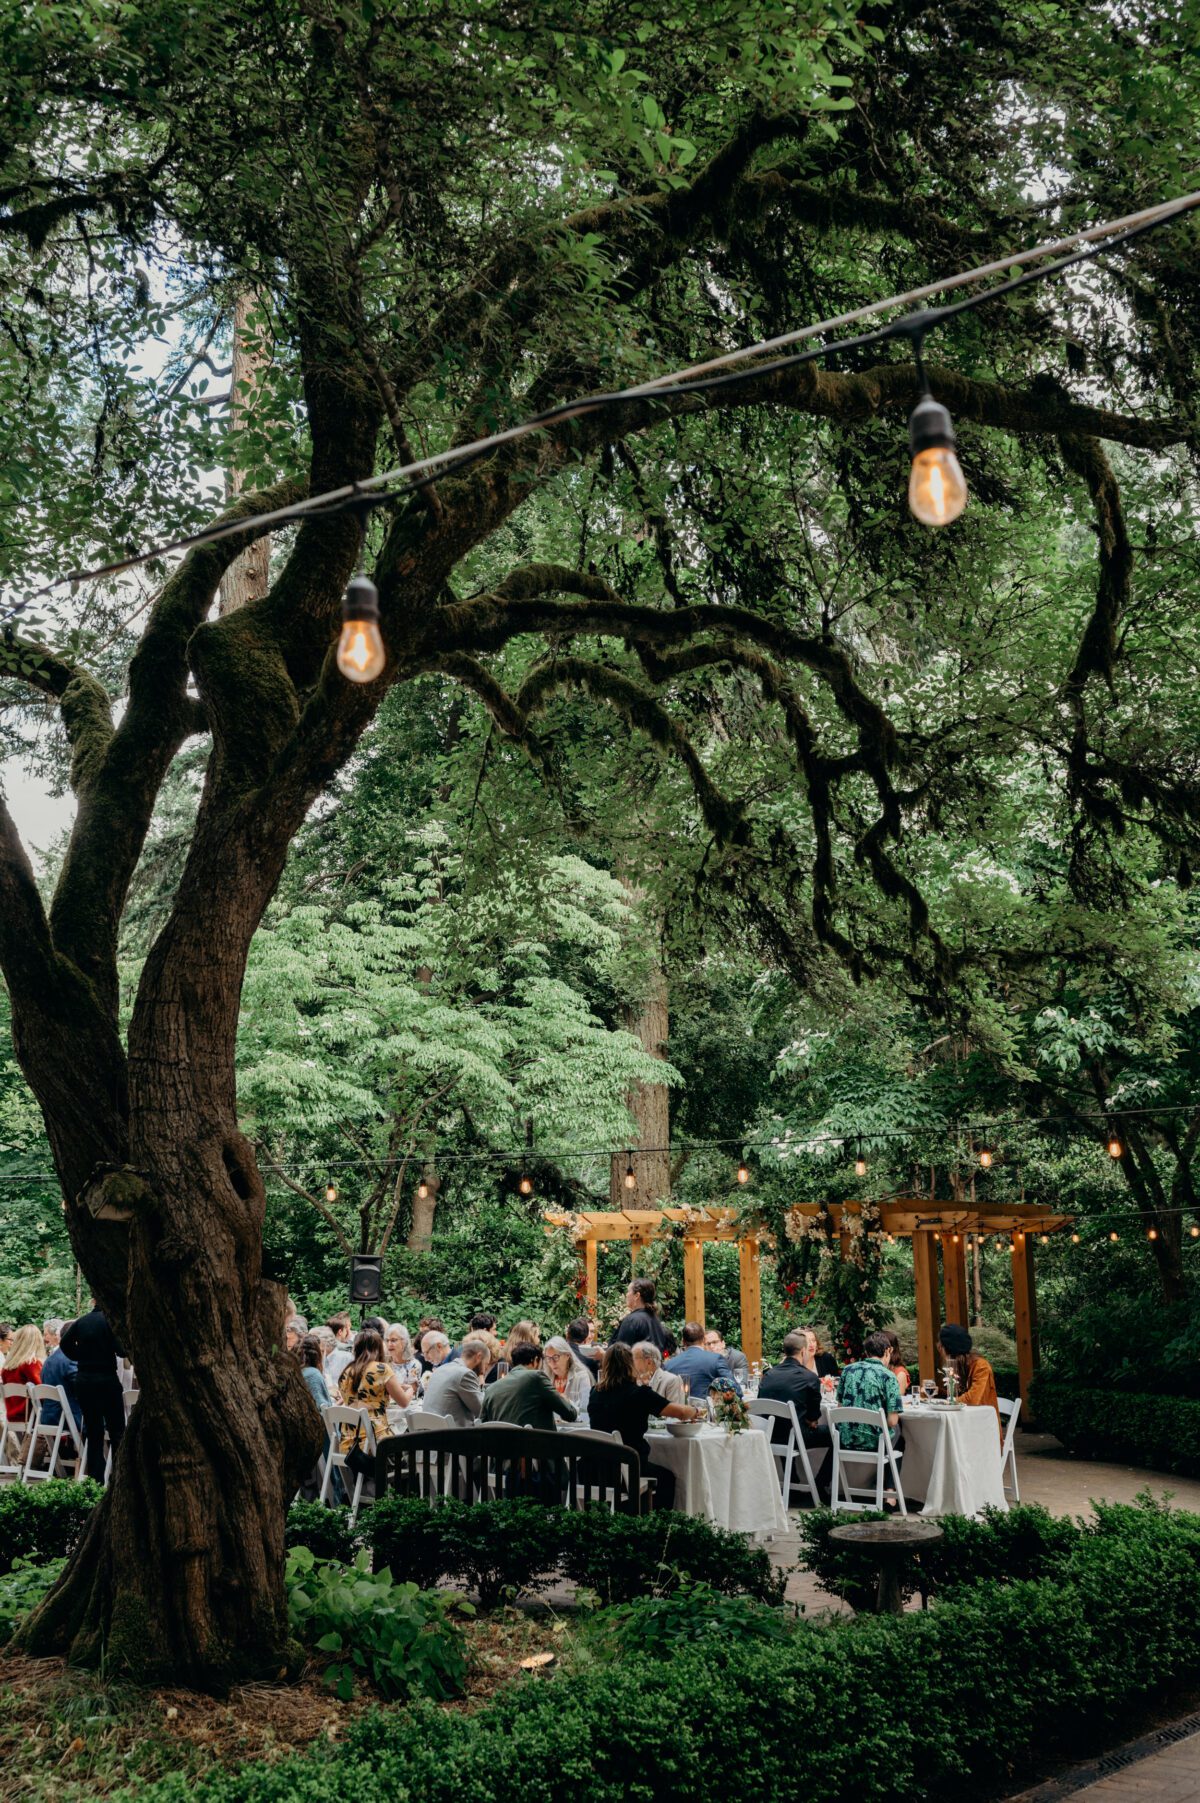 Wedding reception under the trees at Leach Botanical Gardens.